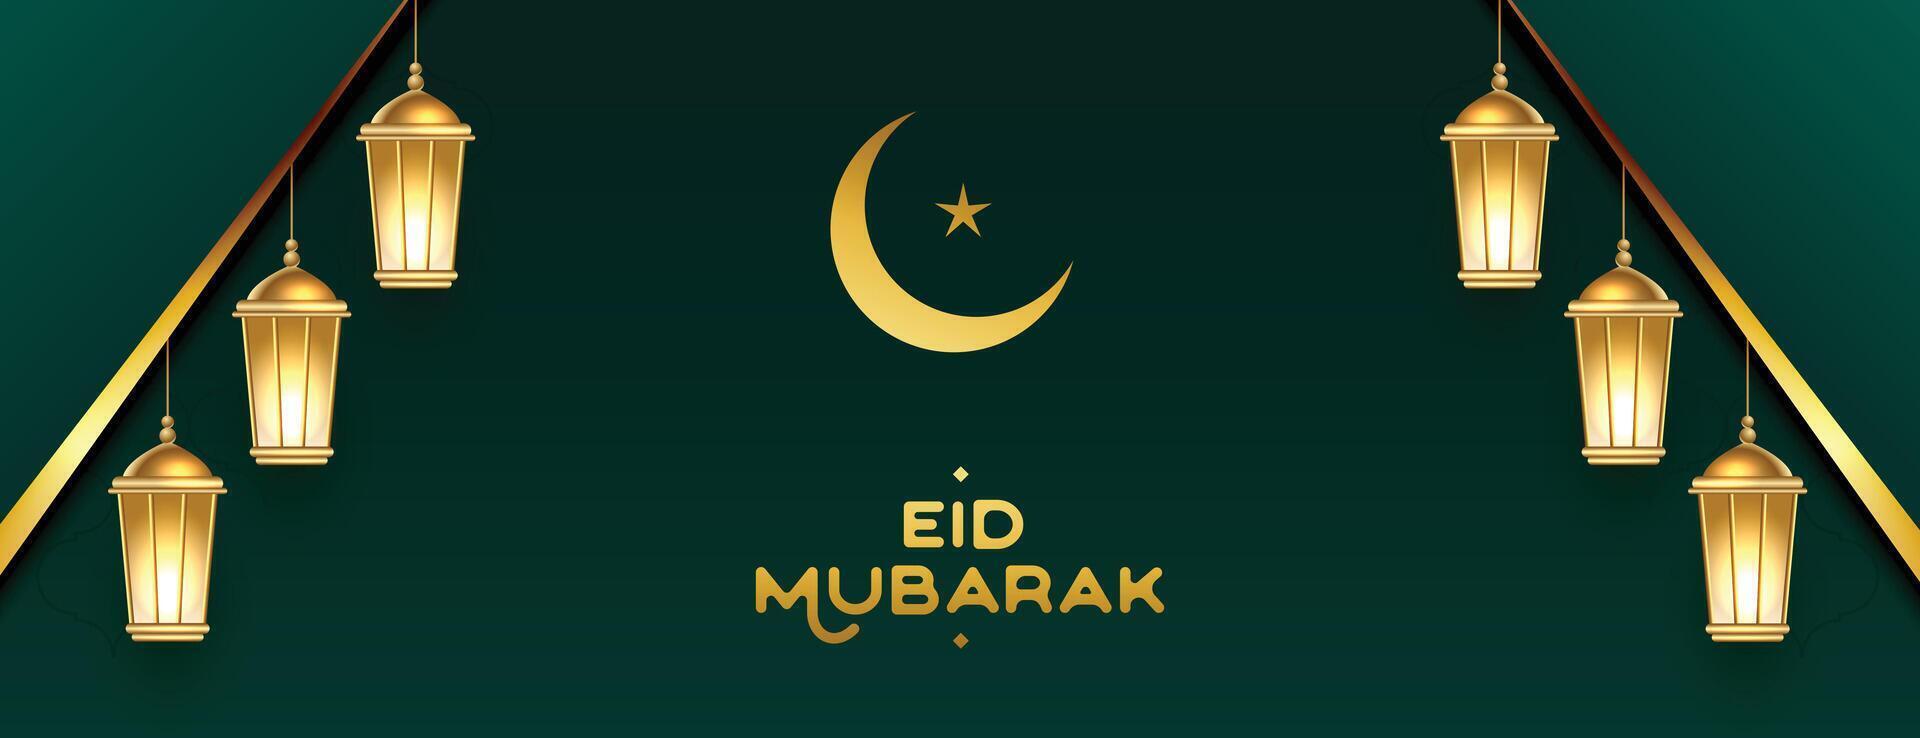 realista eid Mubarak islámico linterna decorativo bandera vector